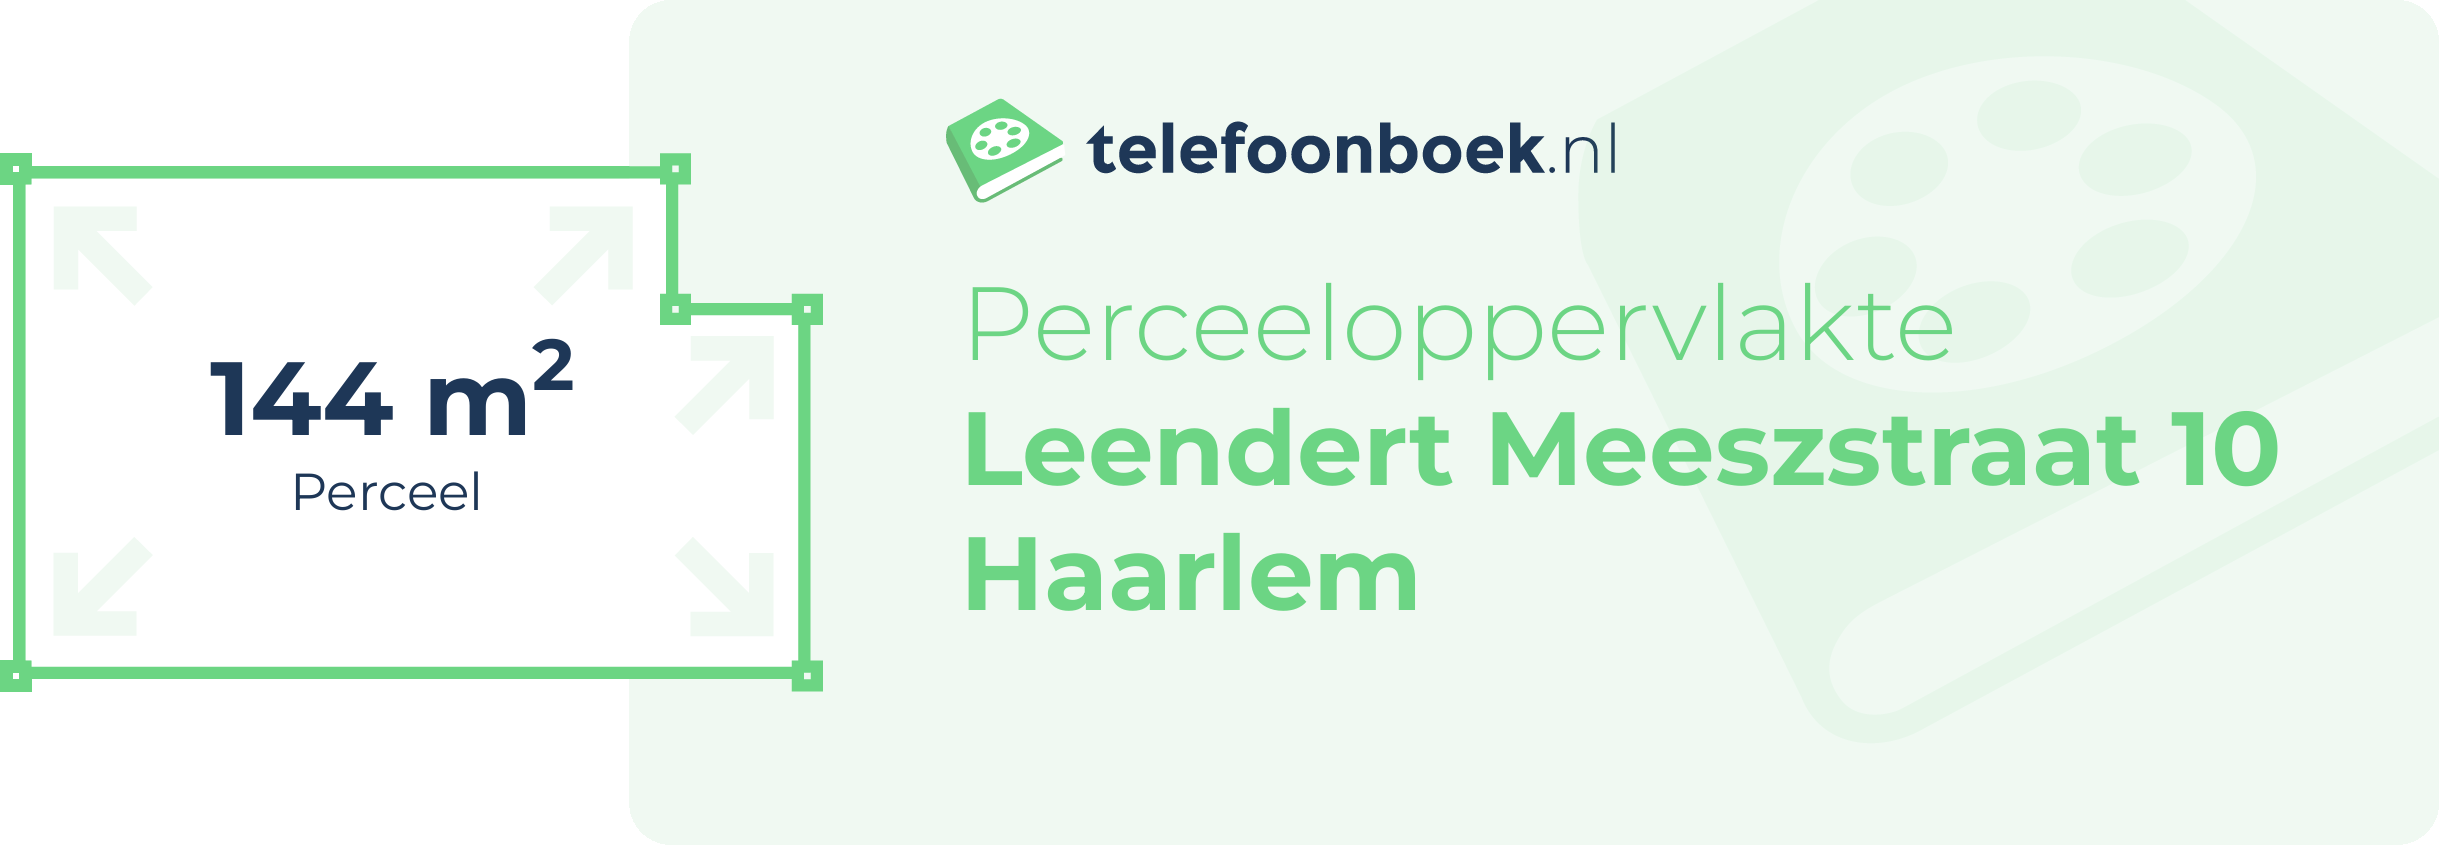 Perceeloppervlakte Leendert Meeszstraat 10 Haarlem